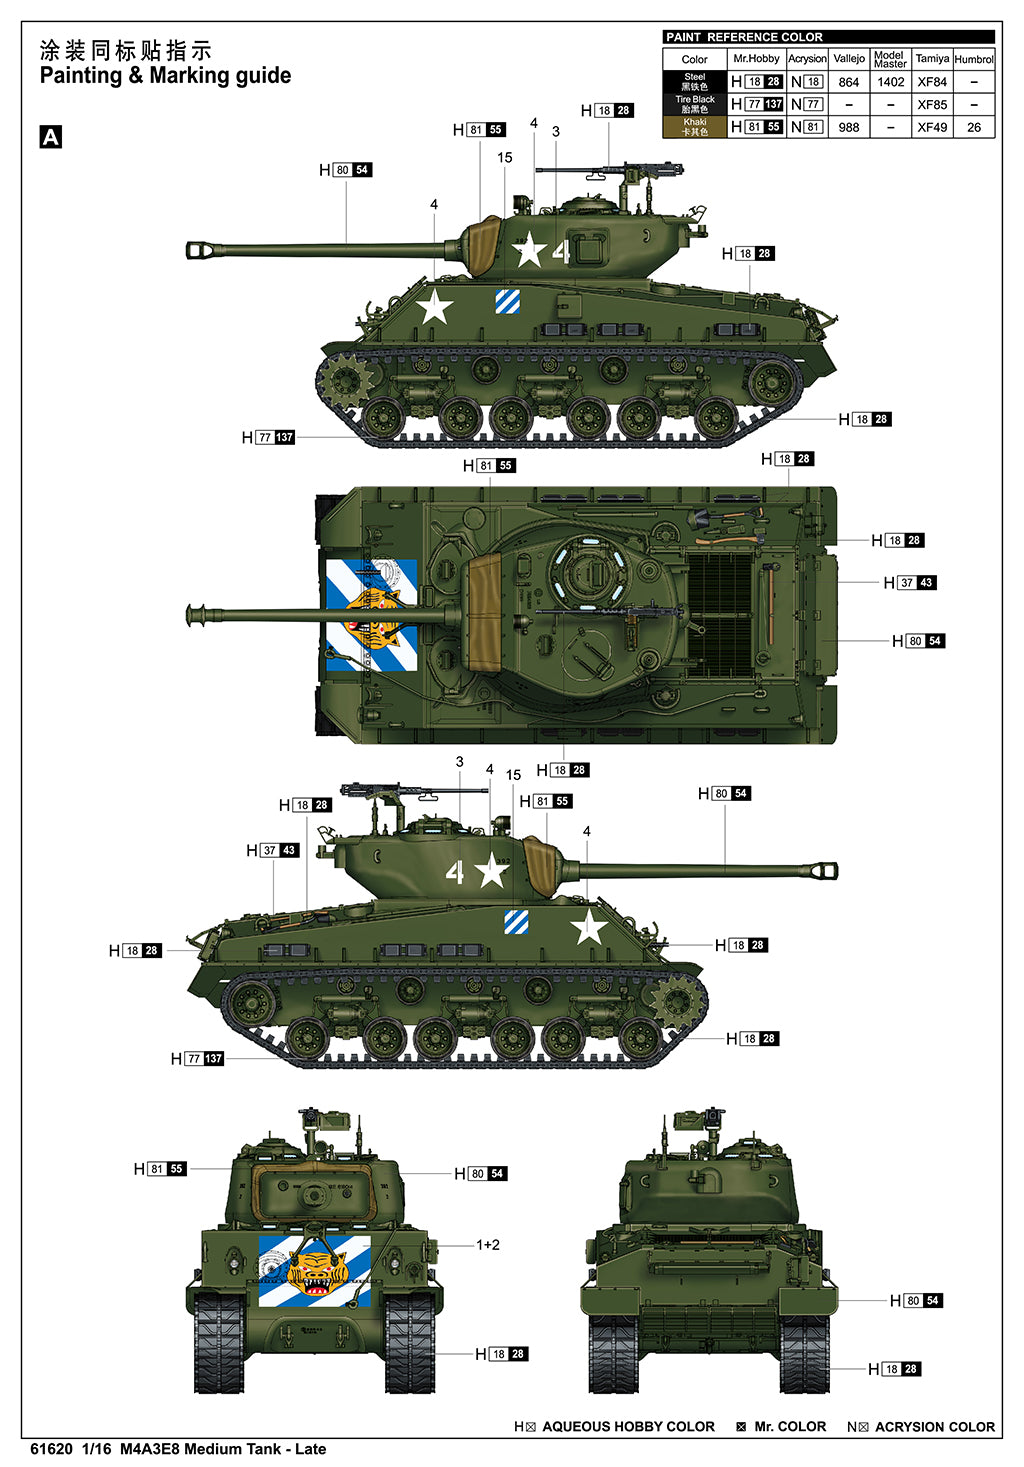 1:16 M4A3E8 Medium Tank - Late